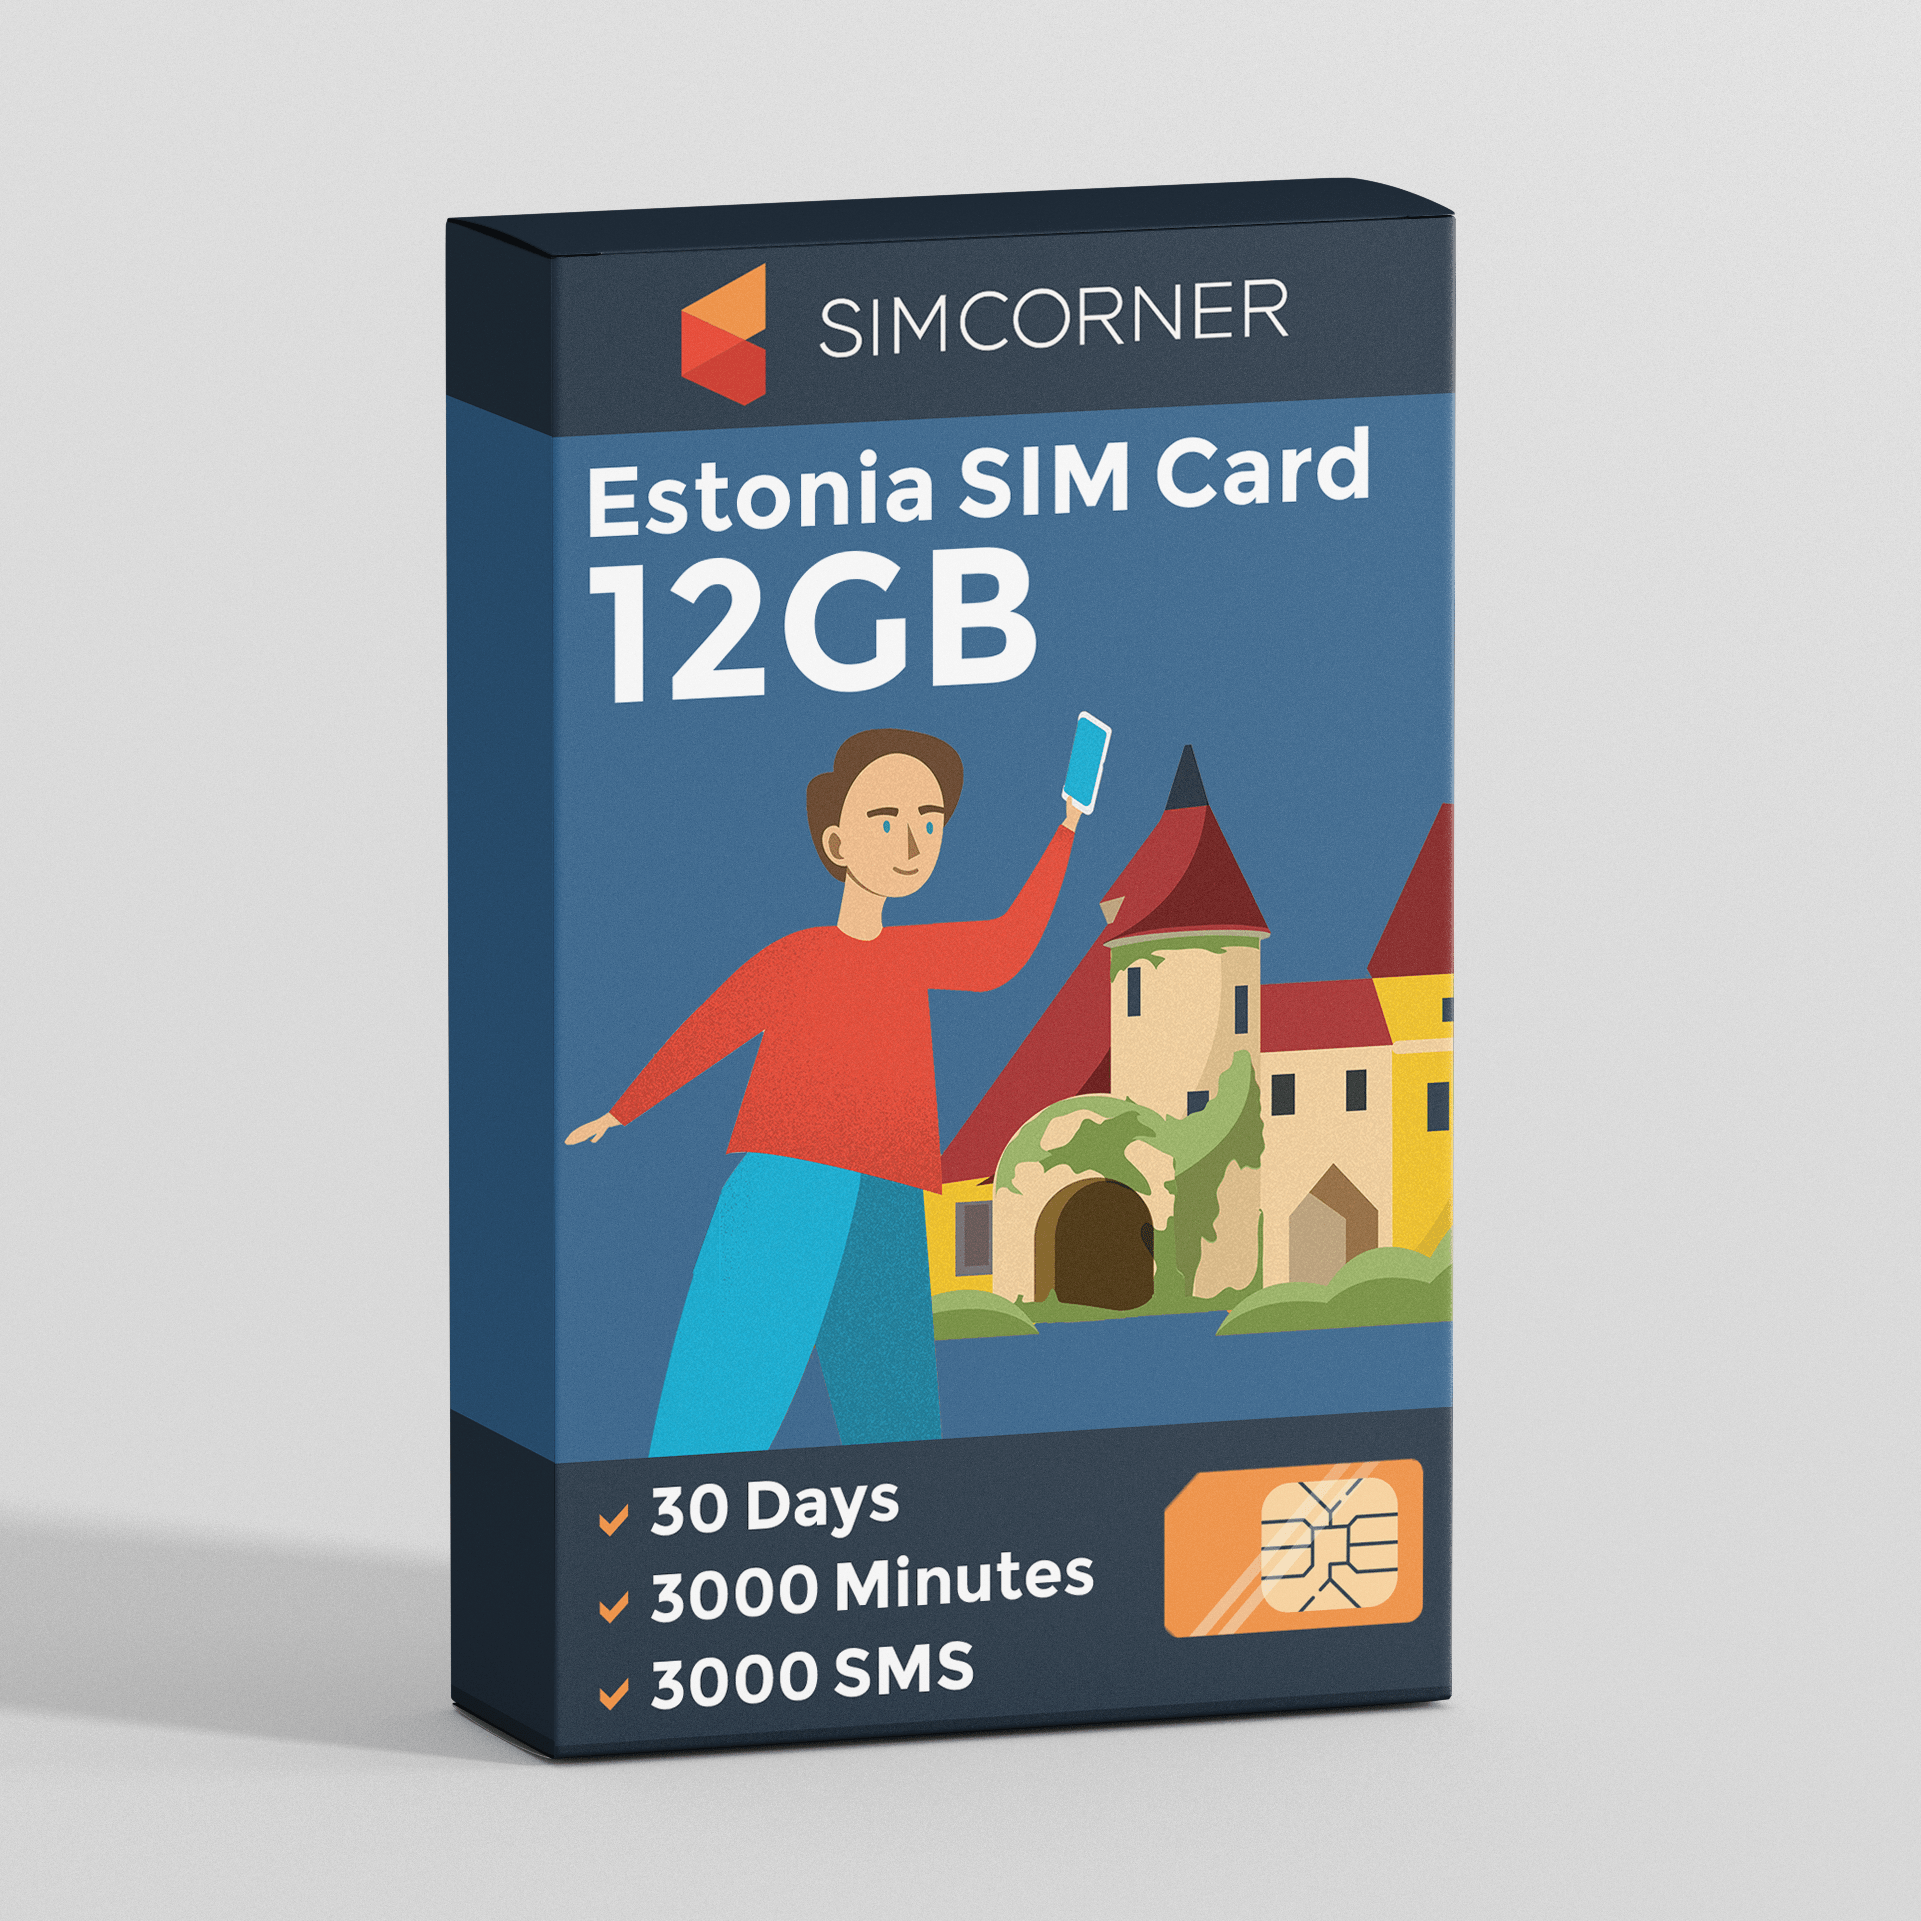 Estonia Travel Sim Card (12GB)